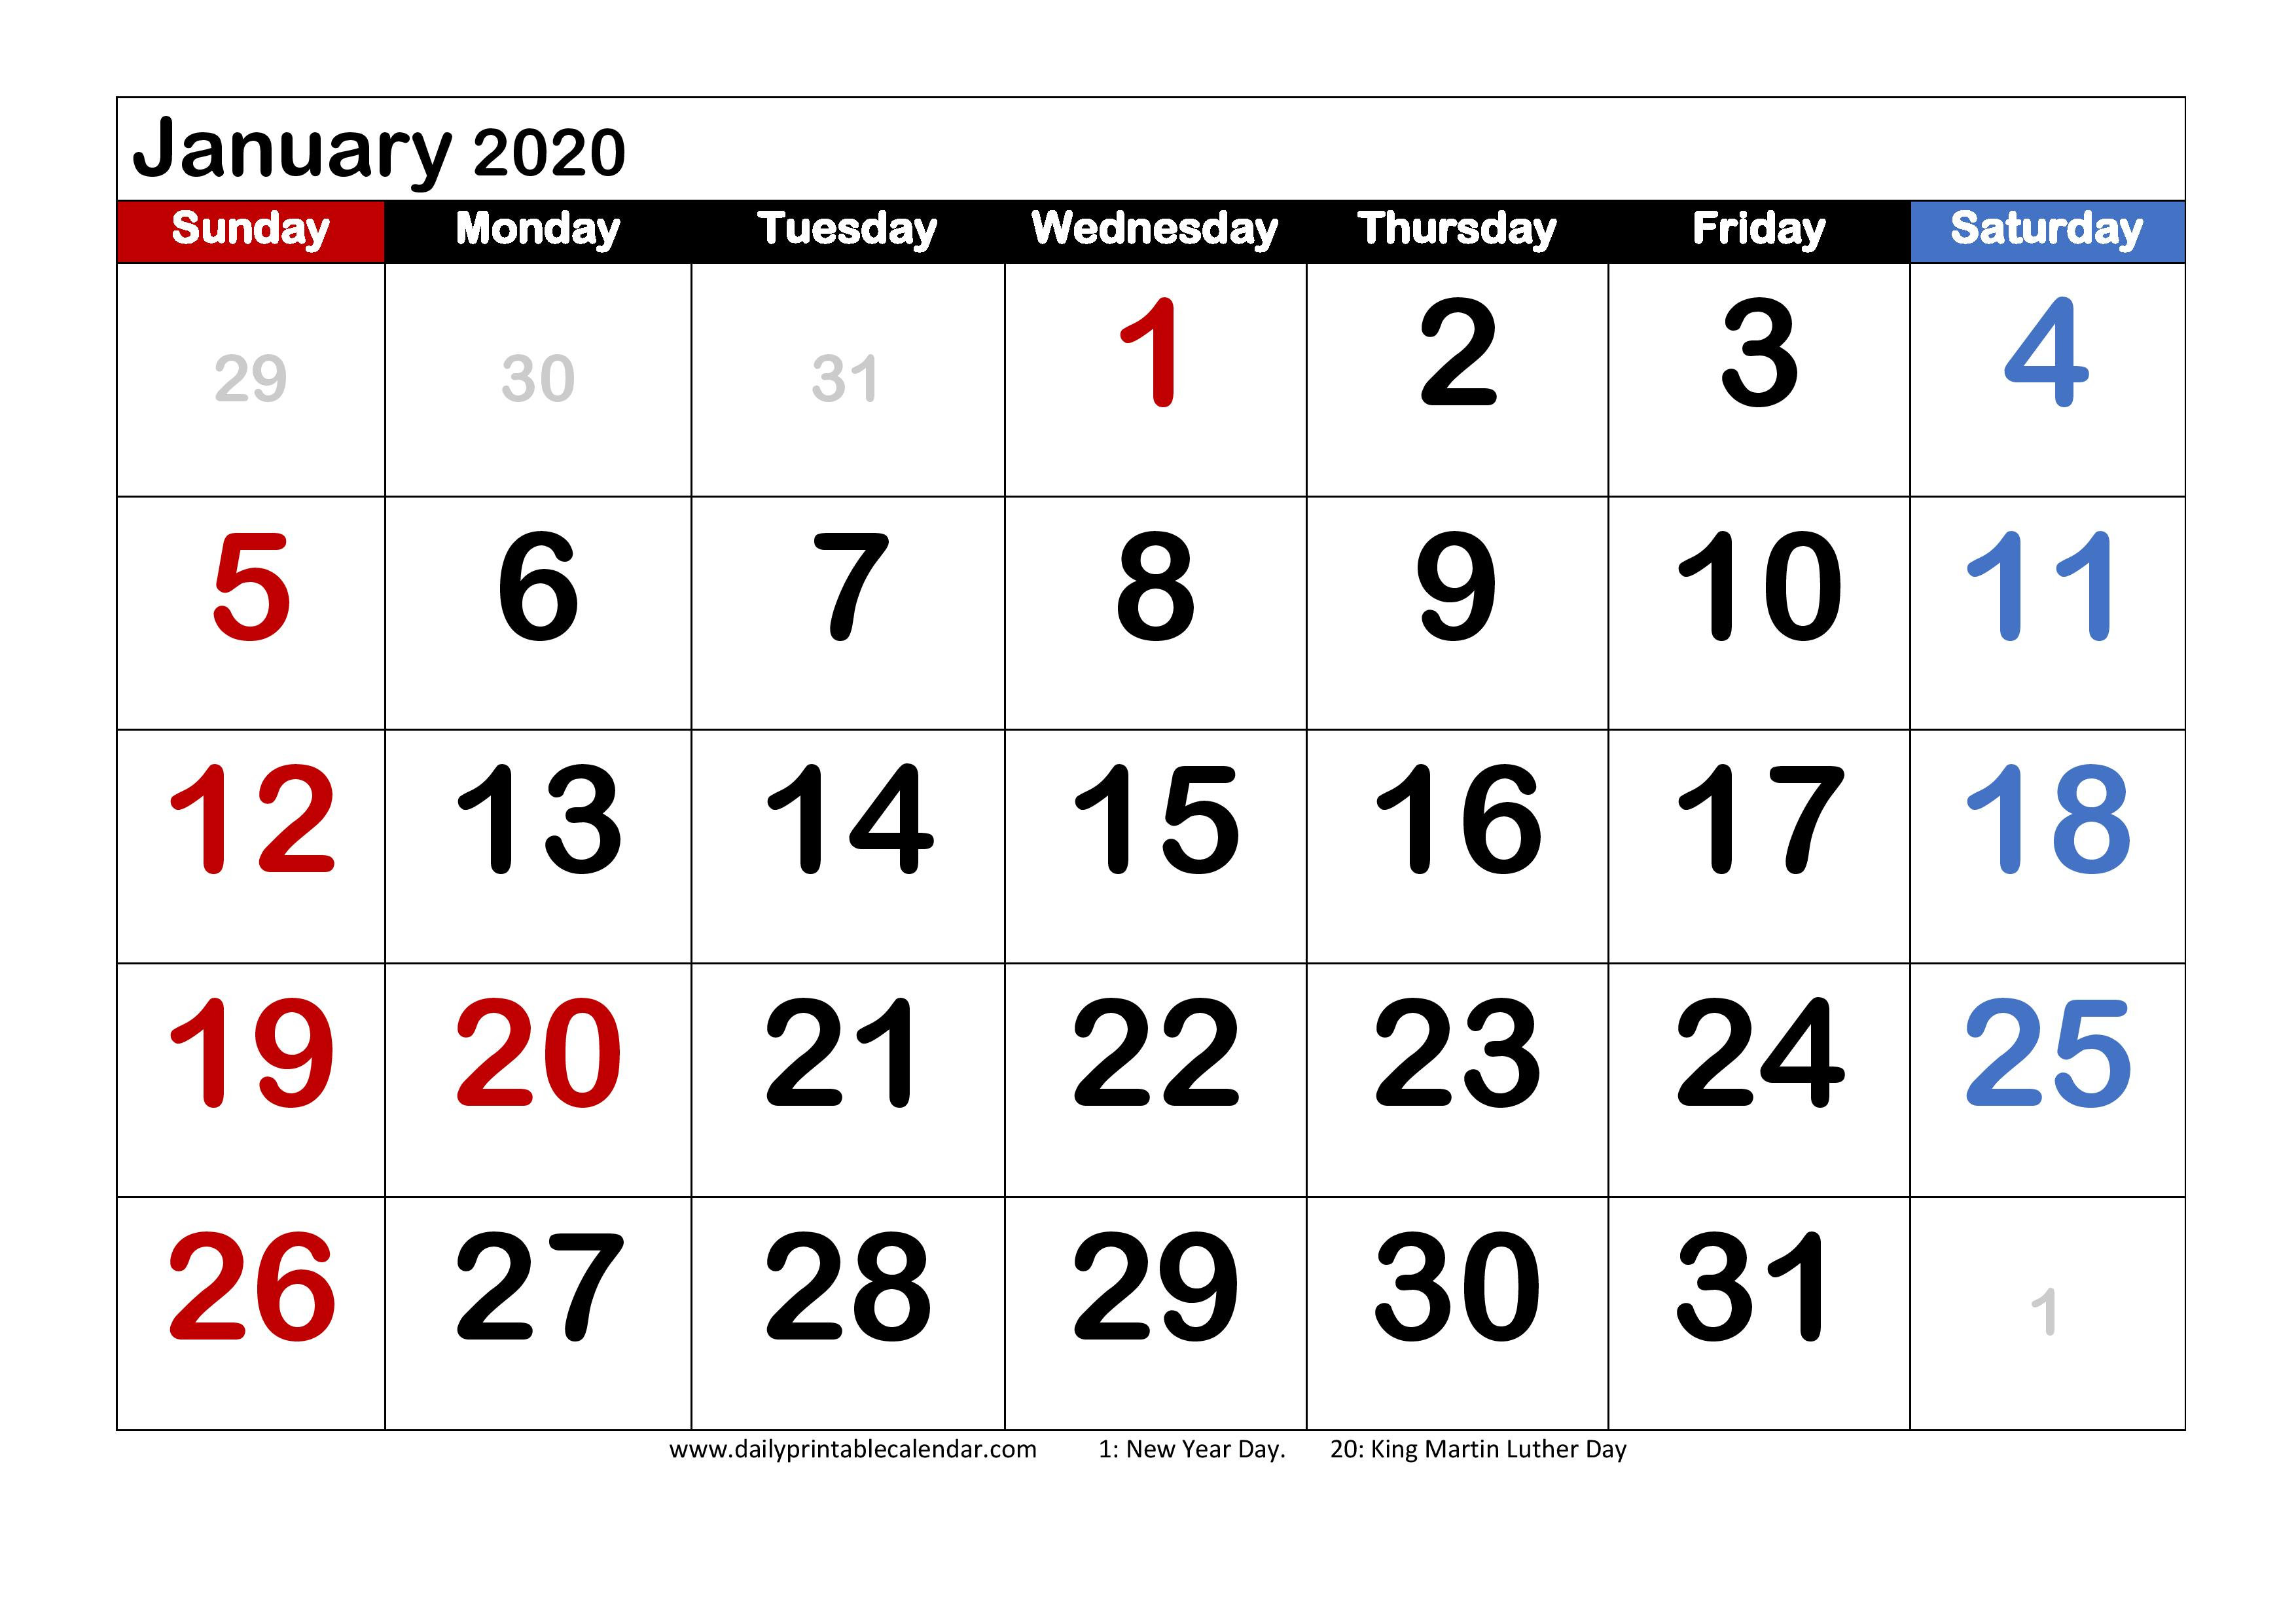 January 2020 Calendar Printable  Blank Templates  2020 pertaining to Show Calendar For January 2020